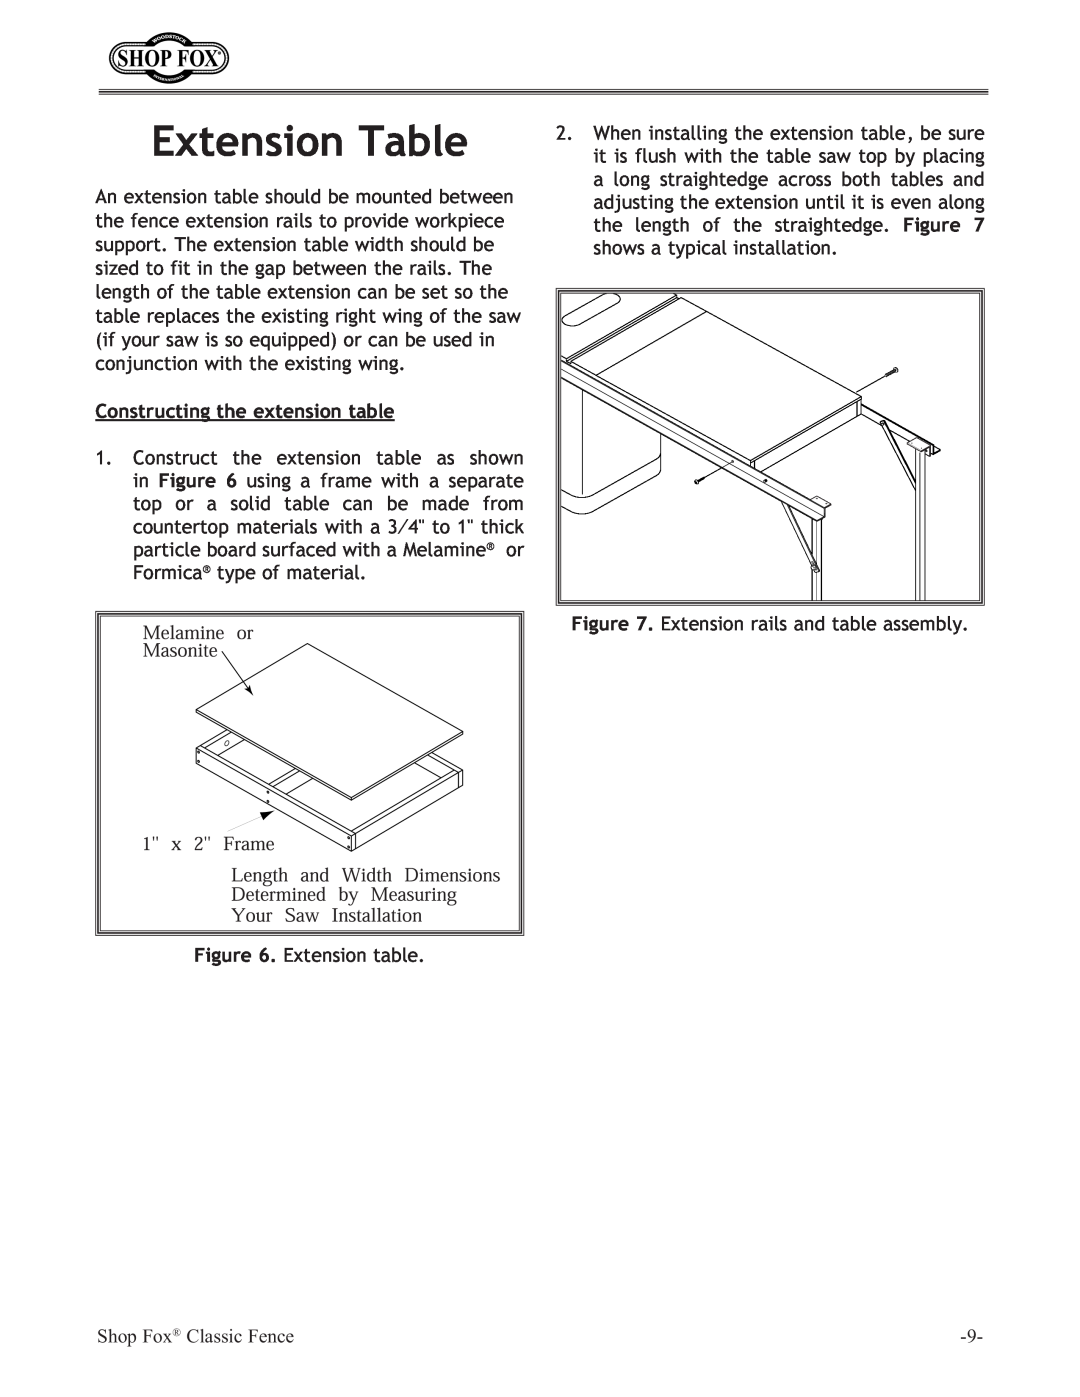 Woodstock W2006, W2005, W2007 instruction manual Extension Table, Constructing the extension table 